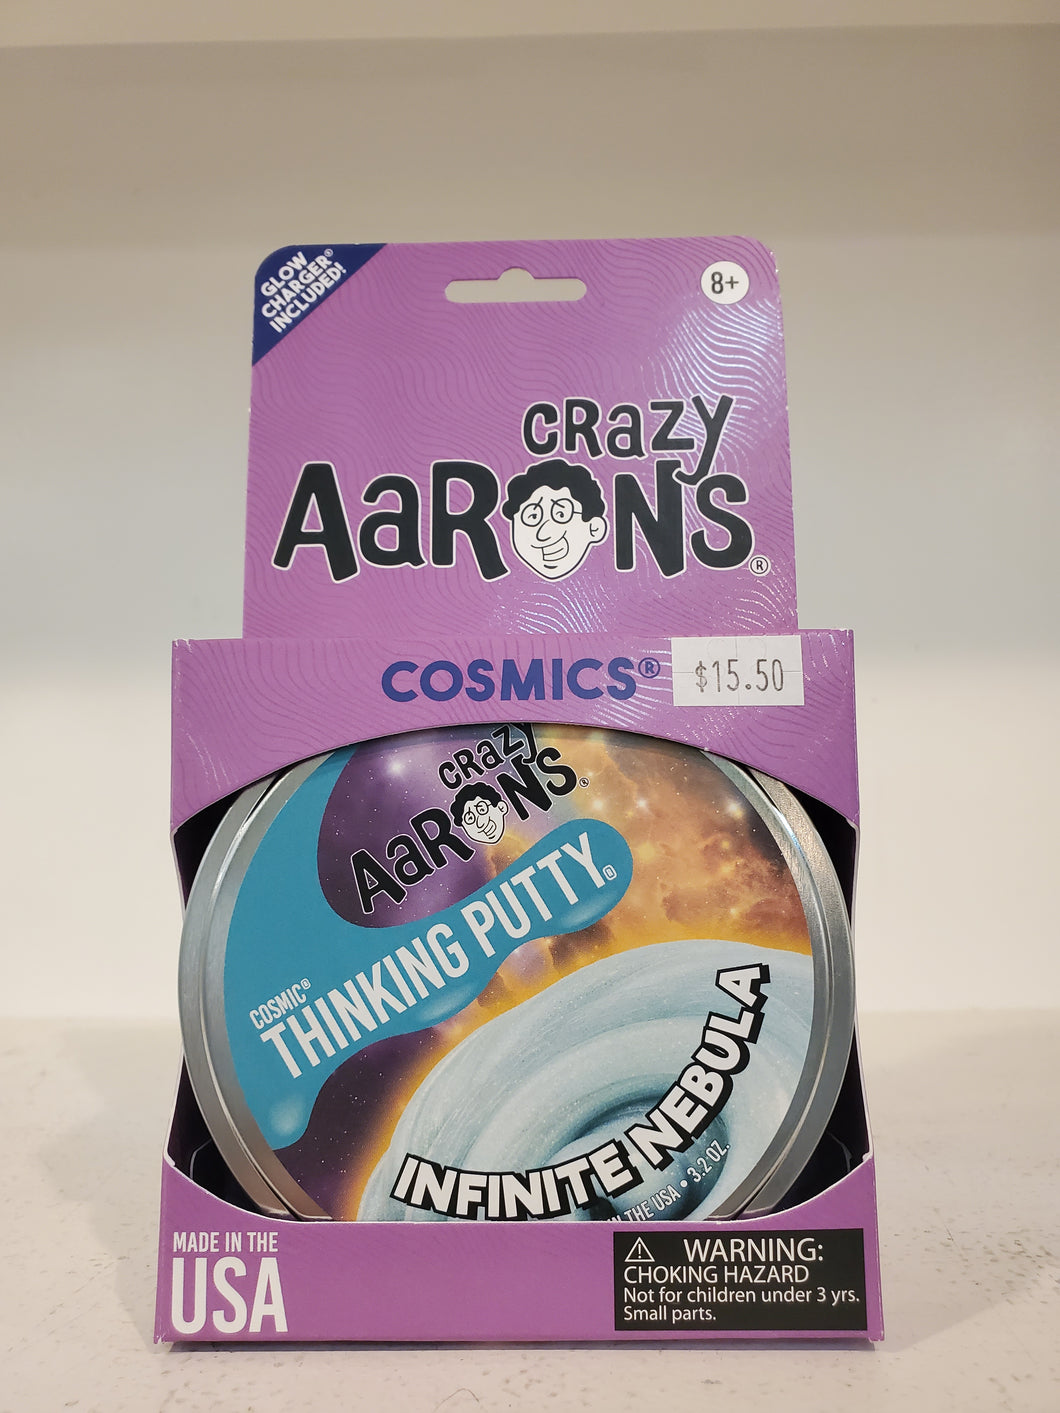 Crazy Aarons Cosmic Thinking Putty: Infinite Nebula